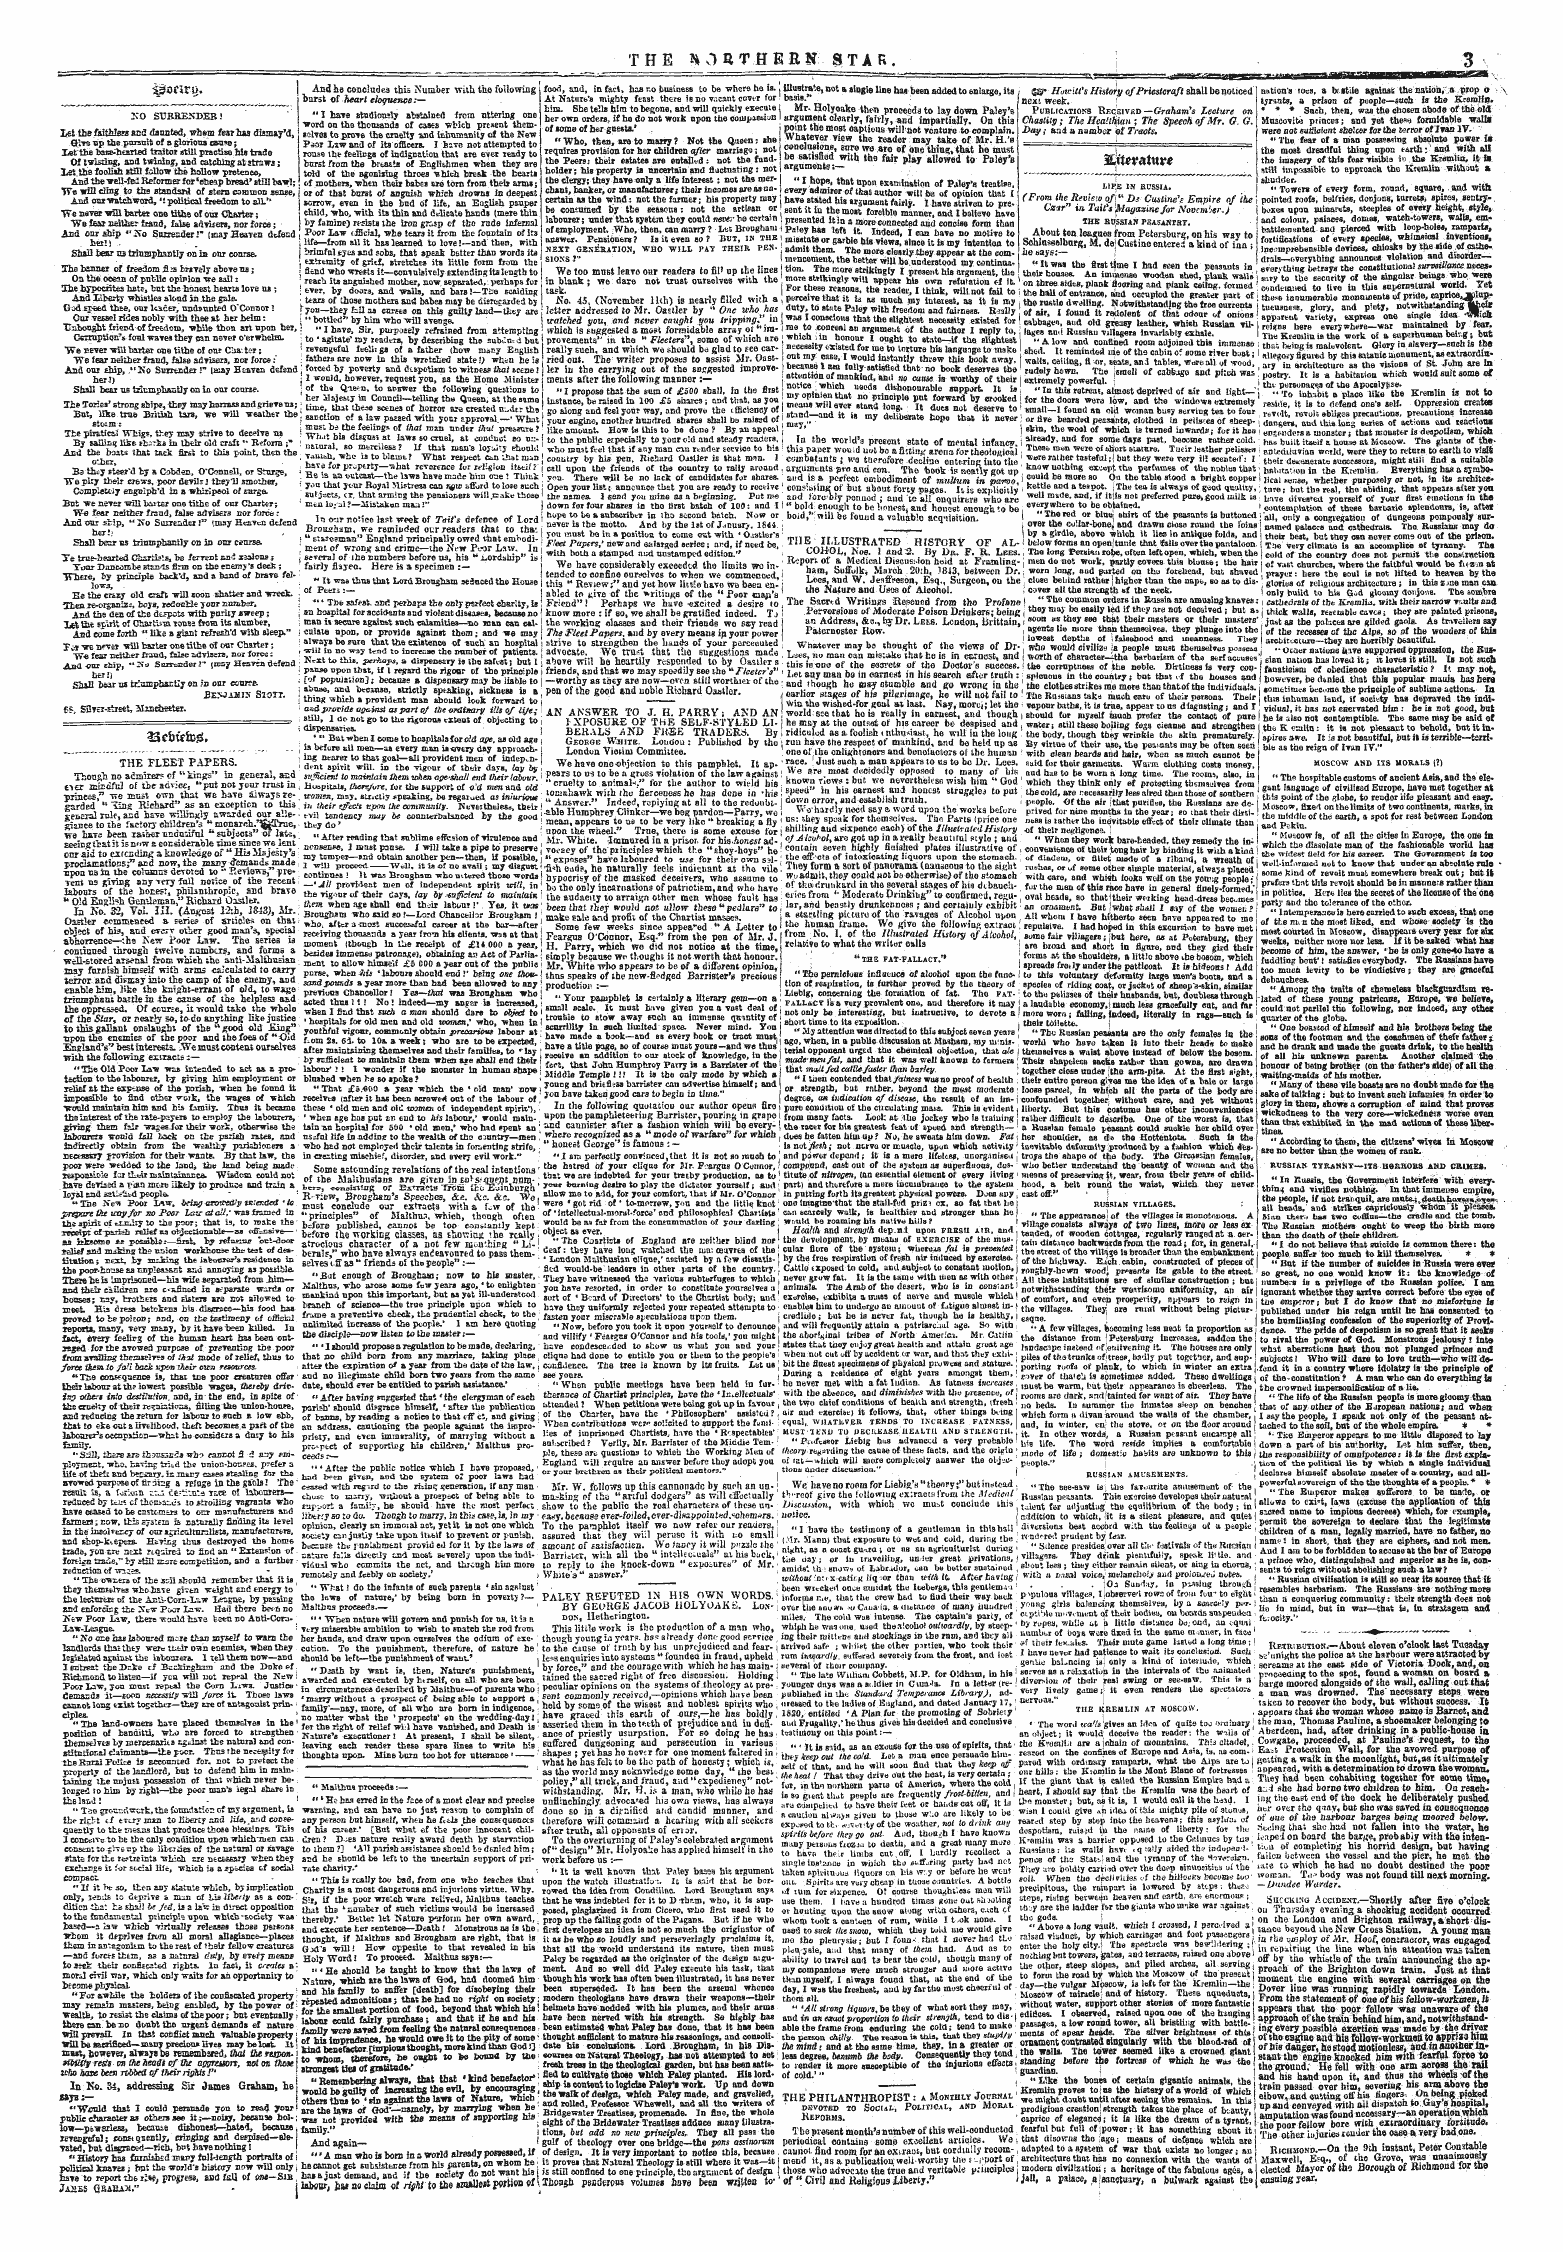 Northern Star (1837-1852): jS F Y, 4th edition - Xfterctttt*